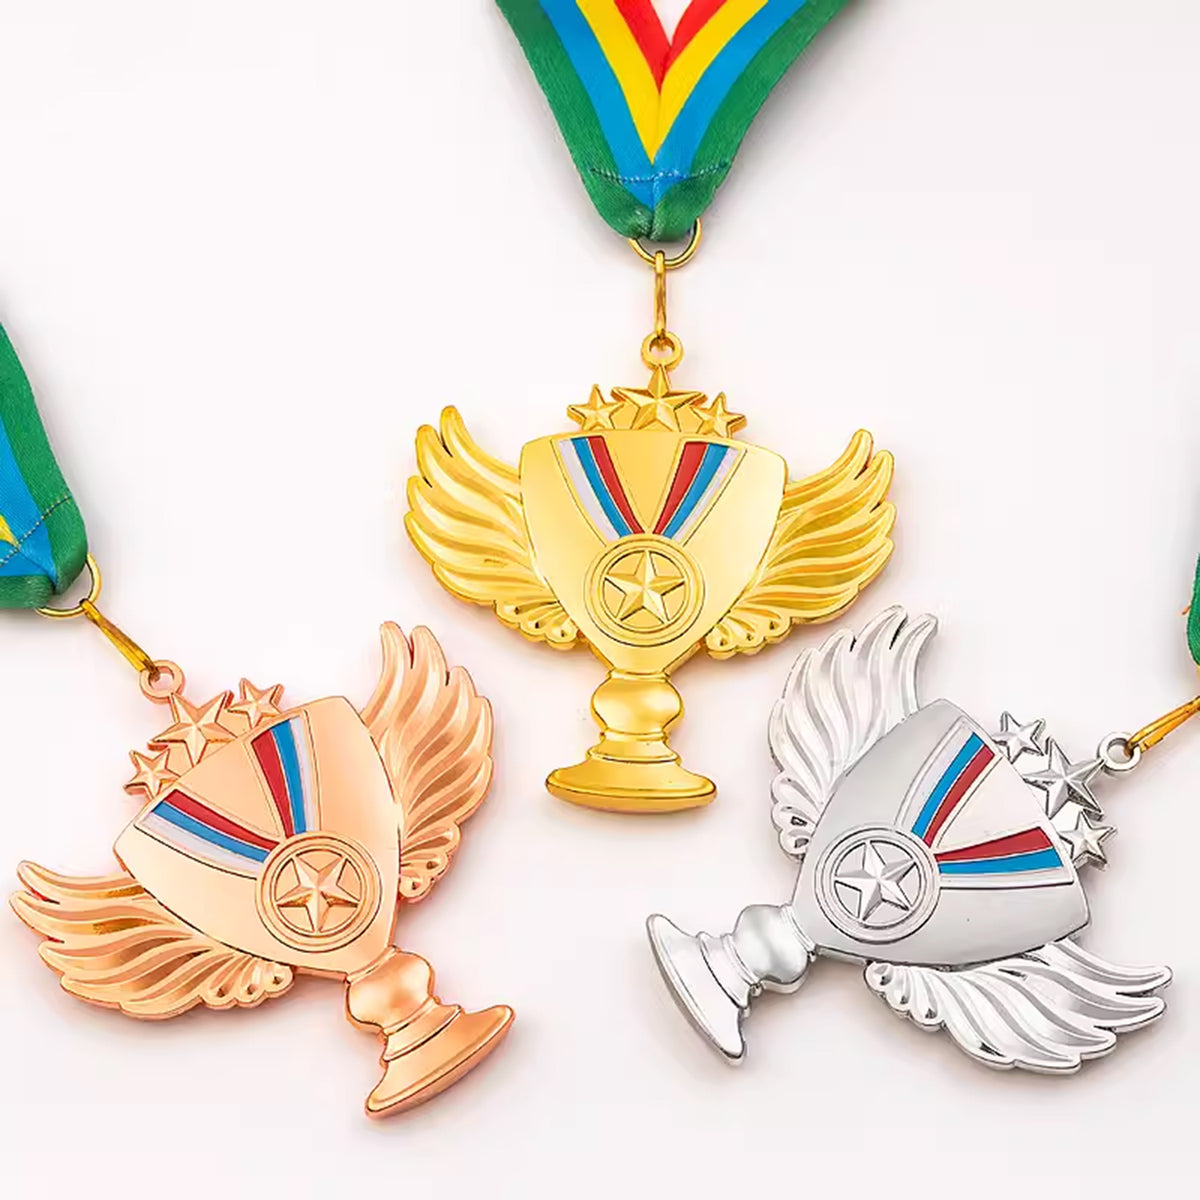 Creative Children And Youth Medals | 獎杯星星獎牌訂製 運動會掛牌榮譽獎章